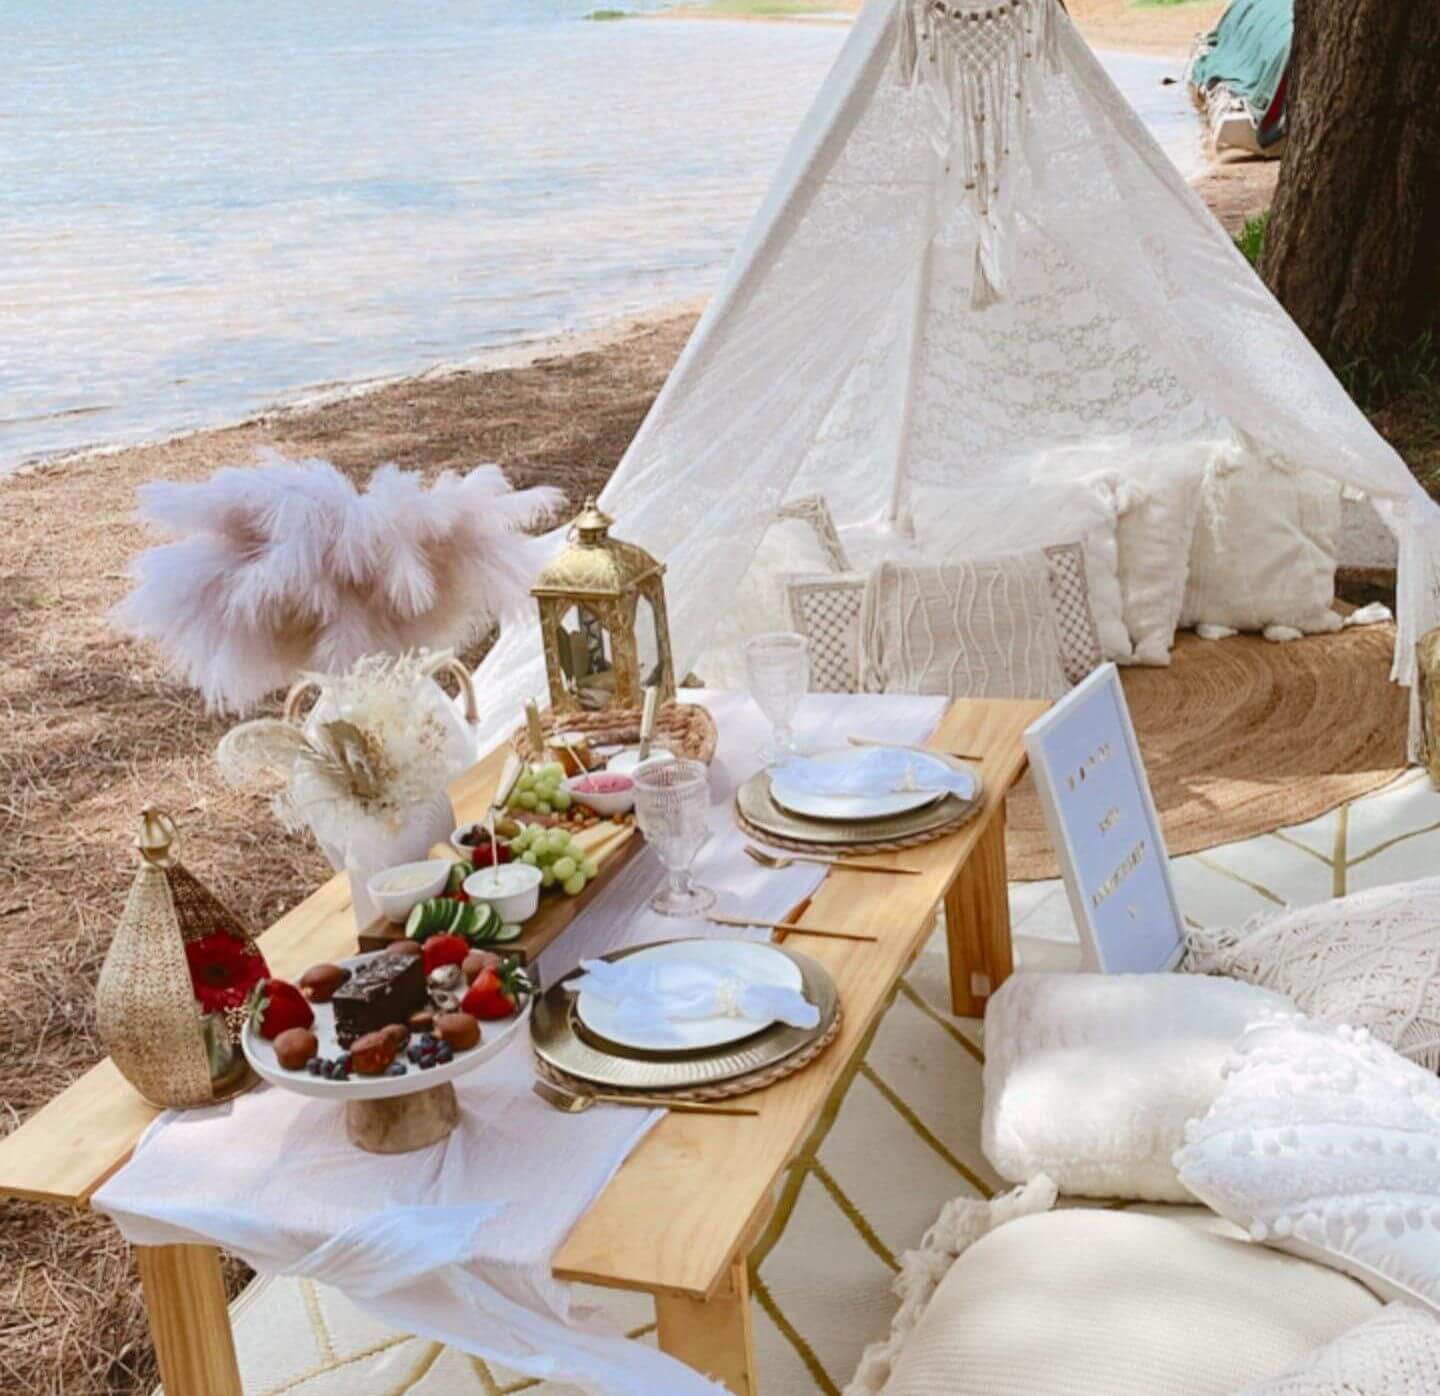 Romantic picnic setup for two